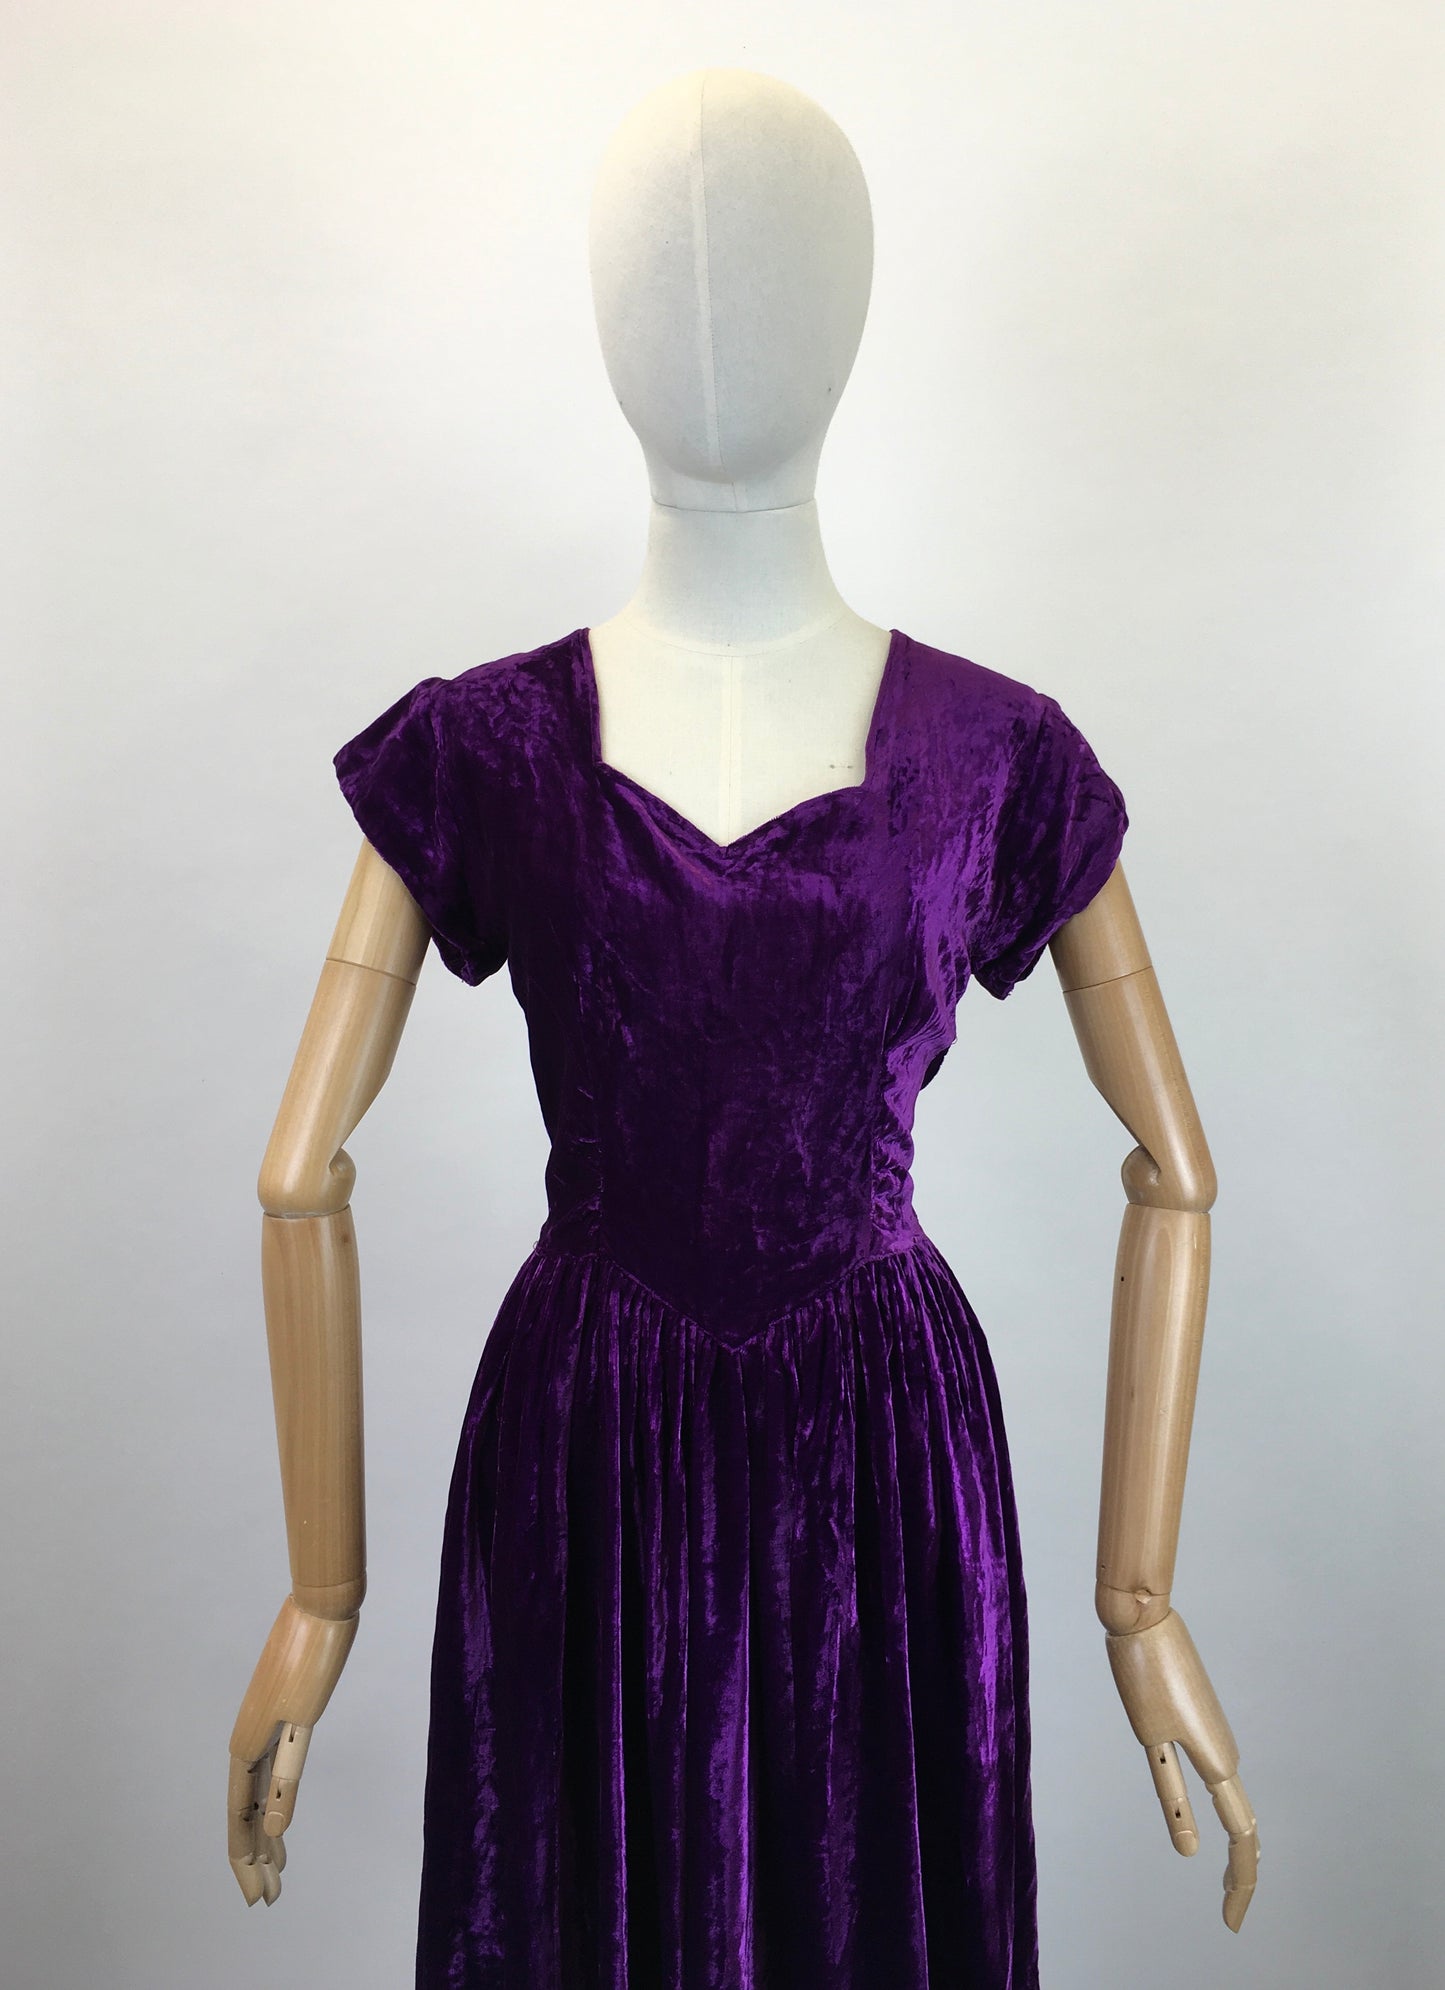 Original Late 1930's Early 1940's Silk Velvet Gown - In A Striking Cadbury Purple